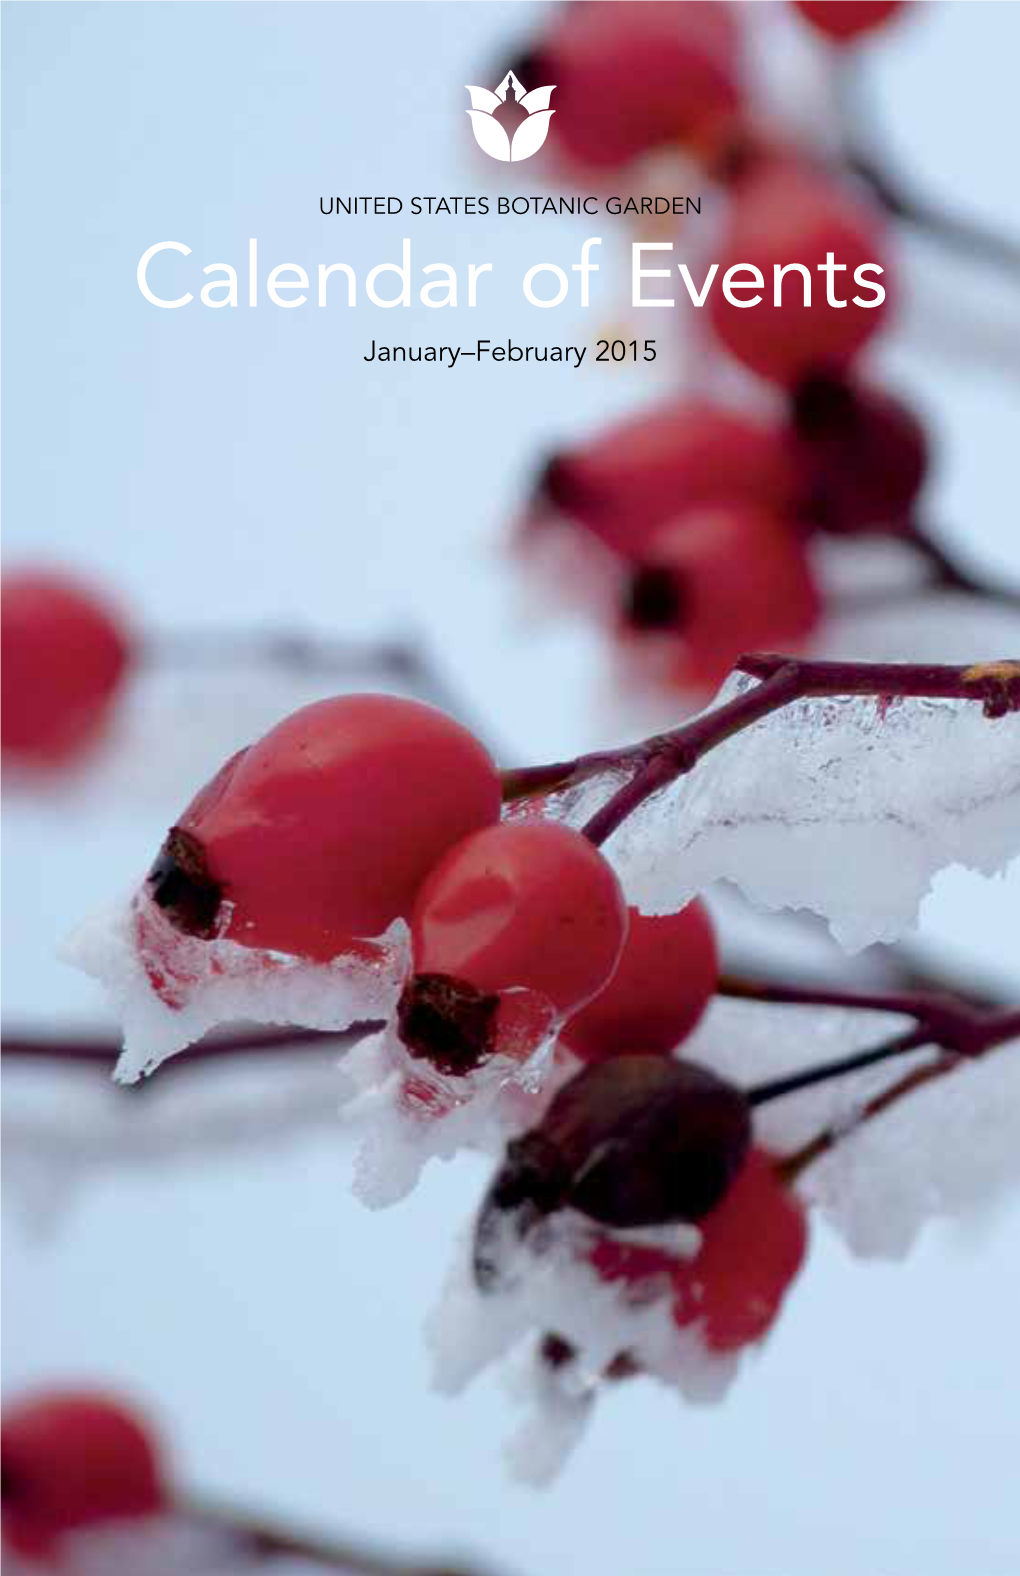 Calendar of Events January–February 2015 the United States Botanic Garden